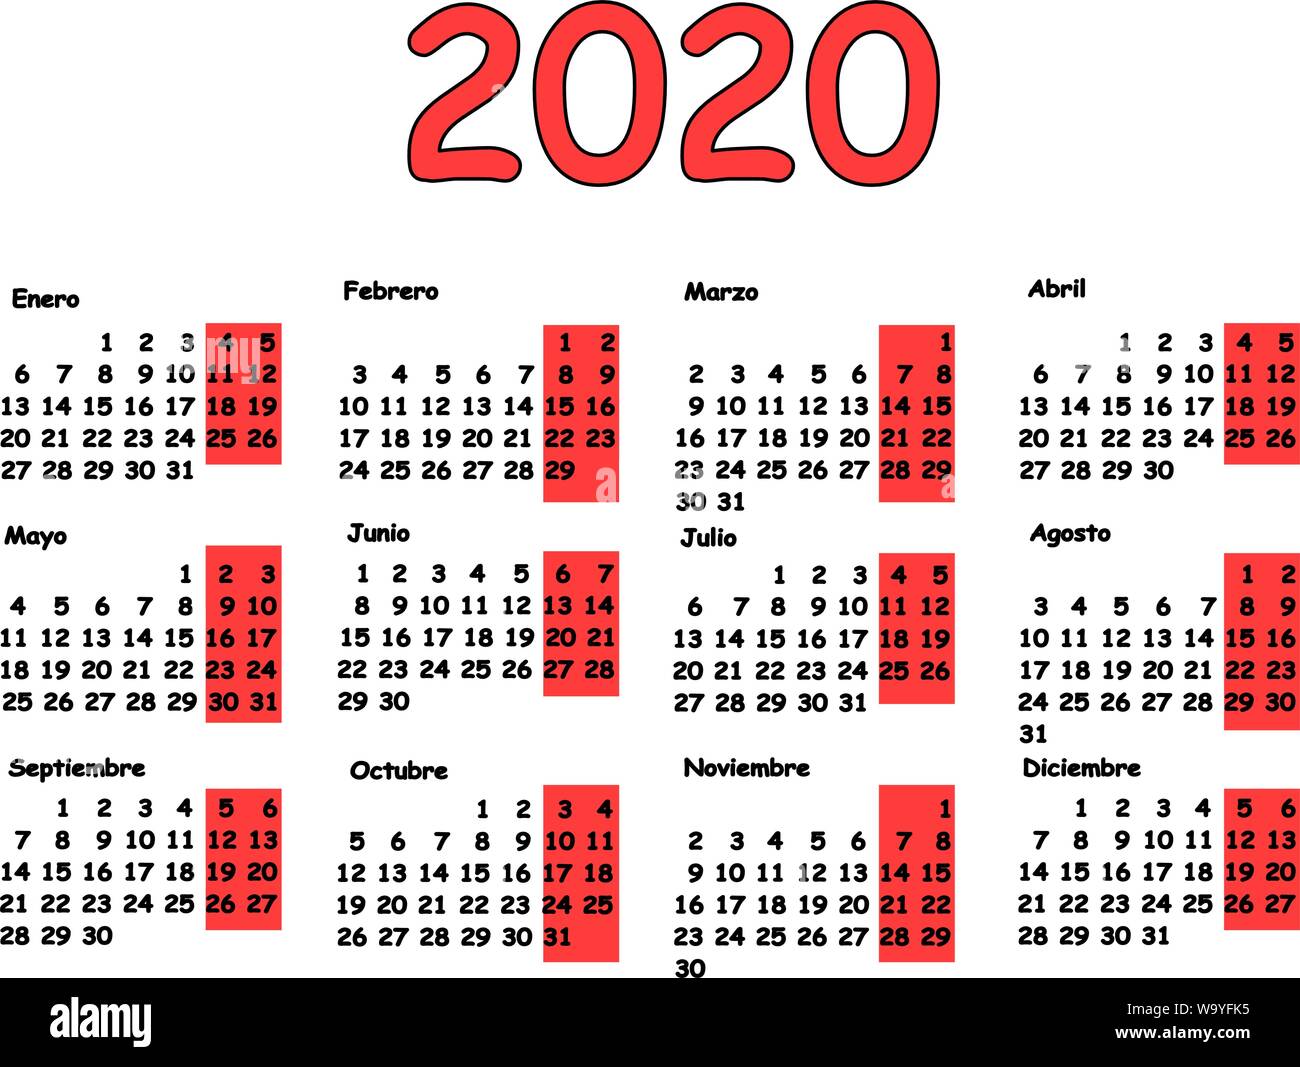 Calendar 2020 grid spanish language. Monthly planning for year. Illustration for calendar design. Stock Vector